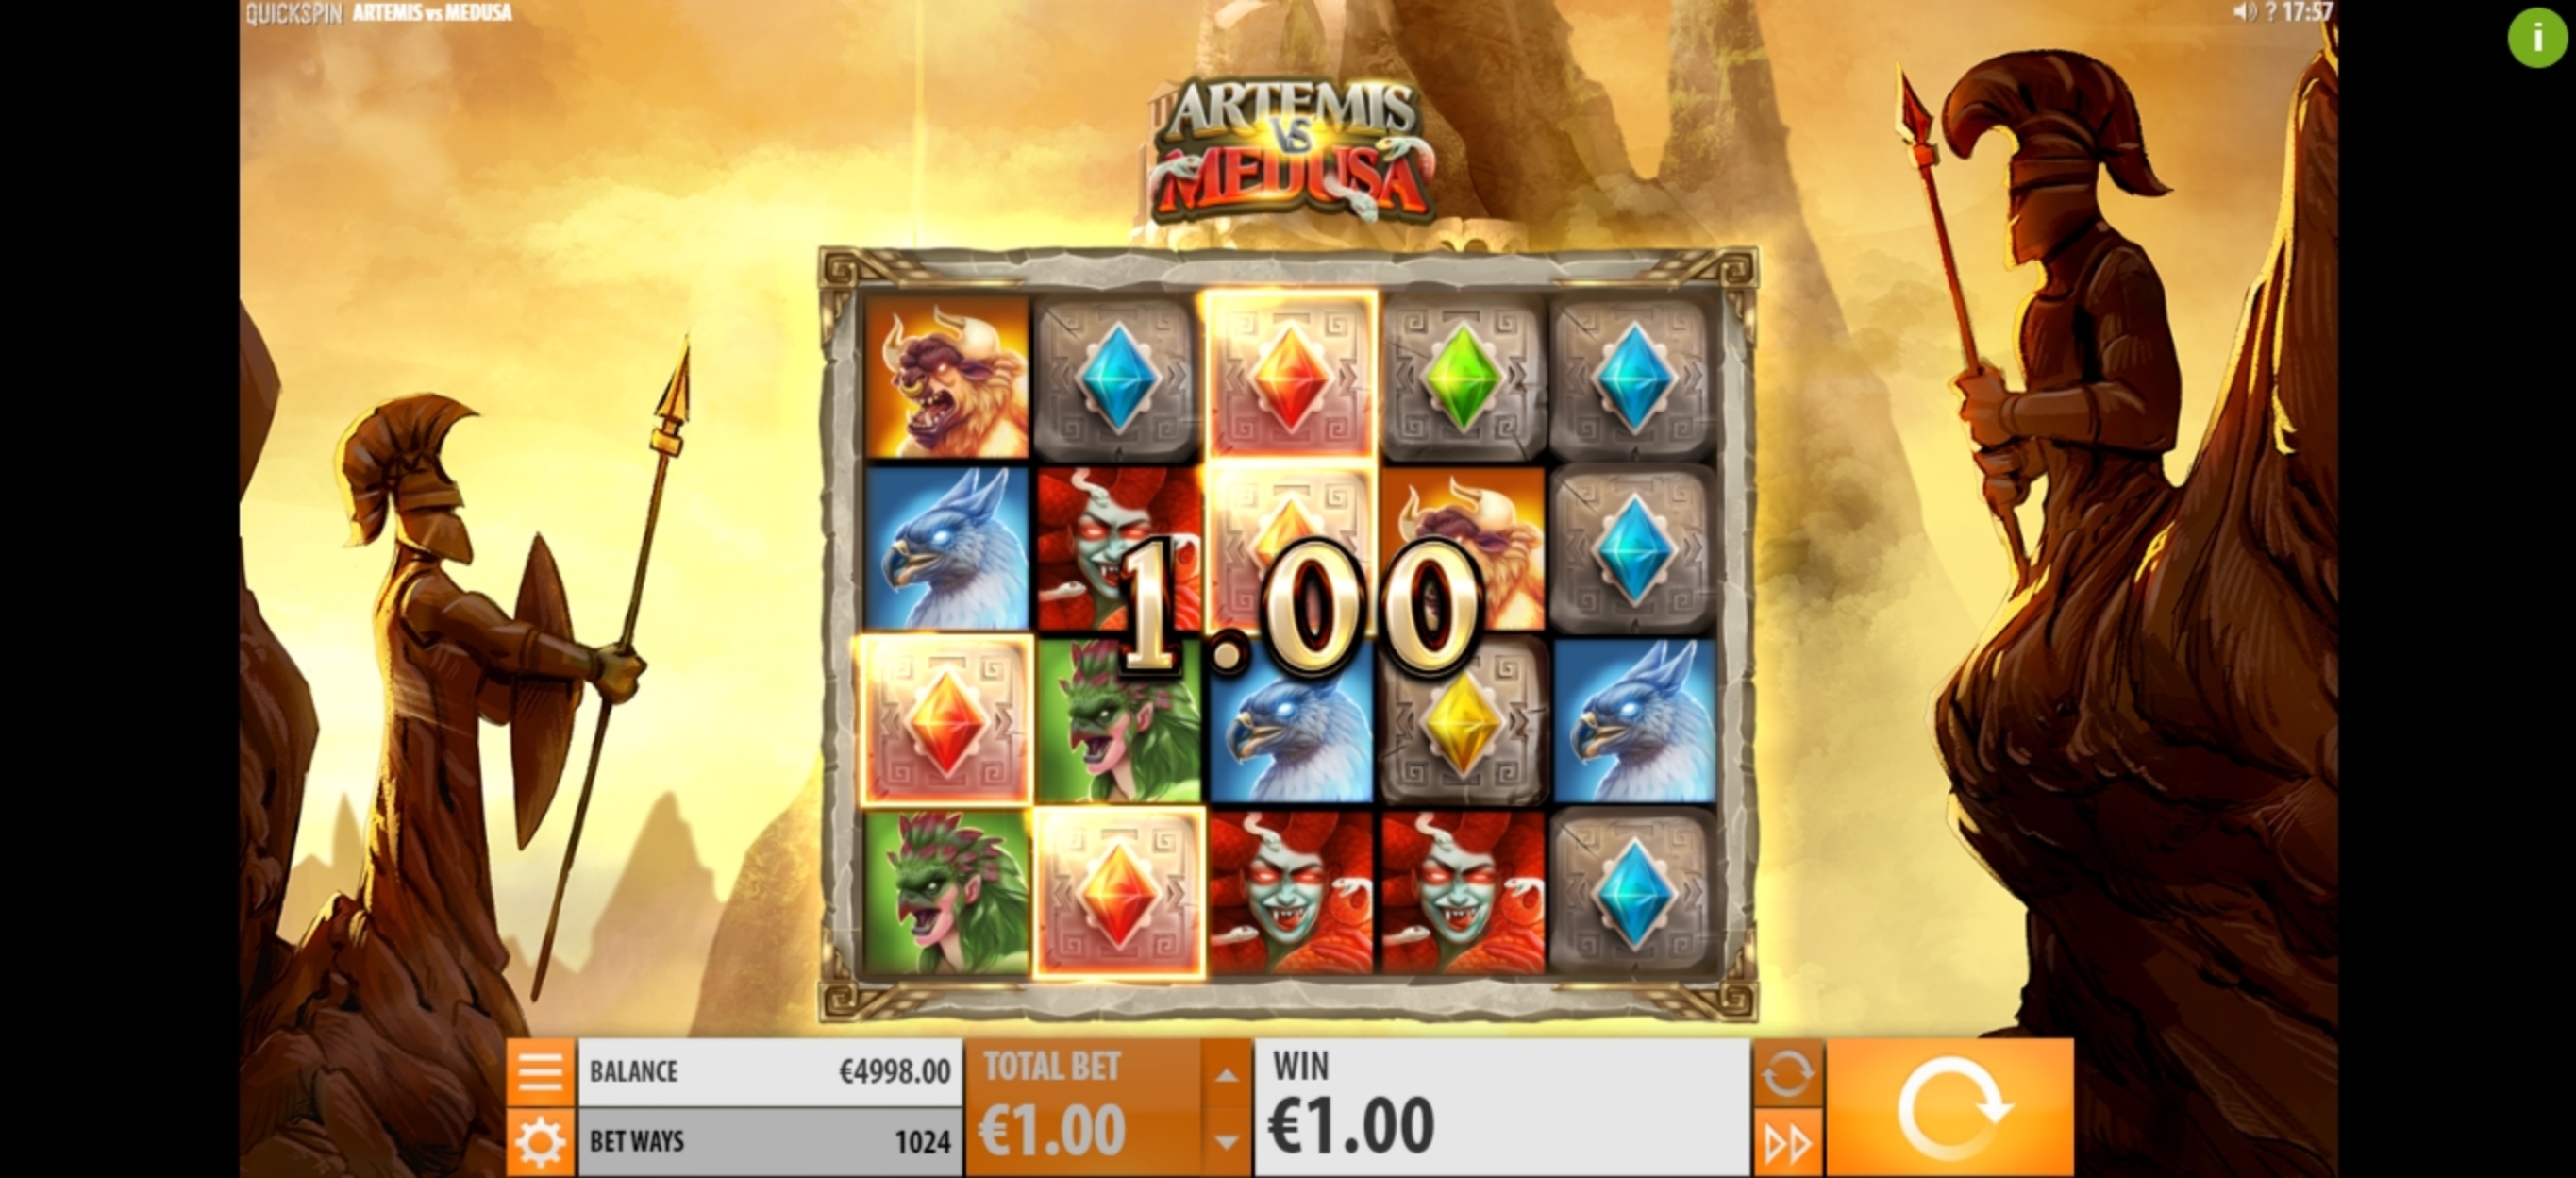 Win Money in Artemis vs Medusa Free Slot Game by Quickspin